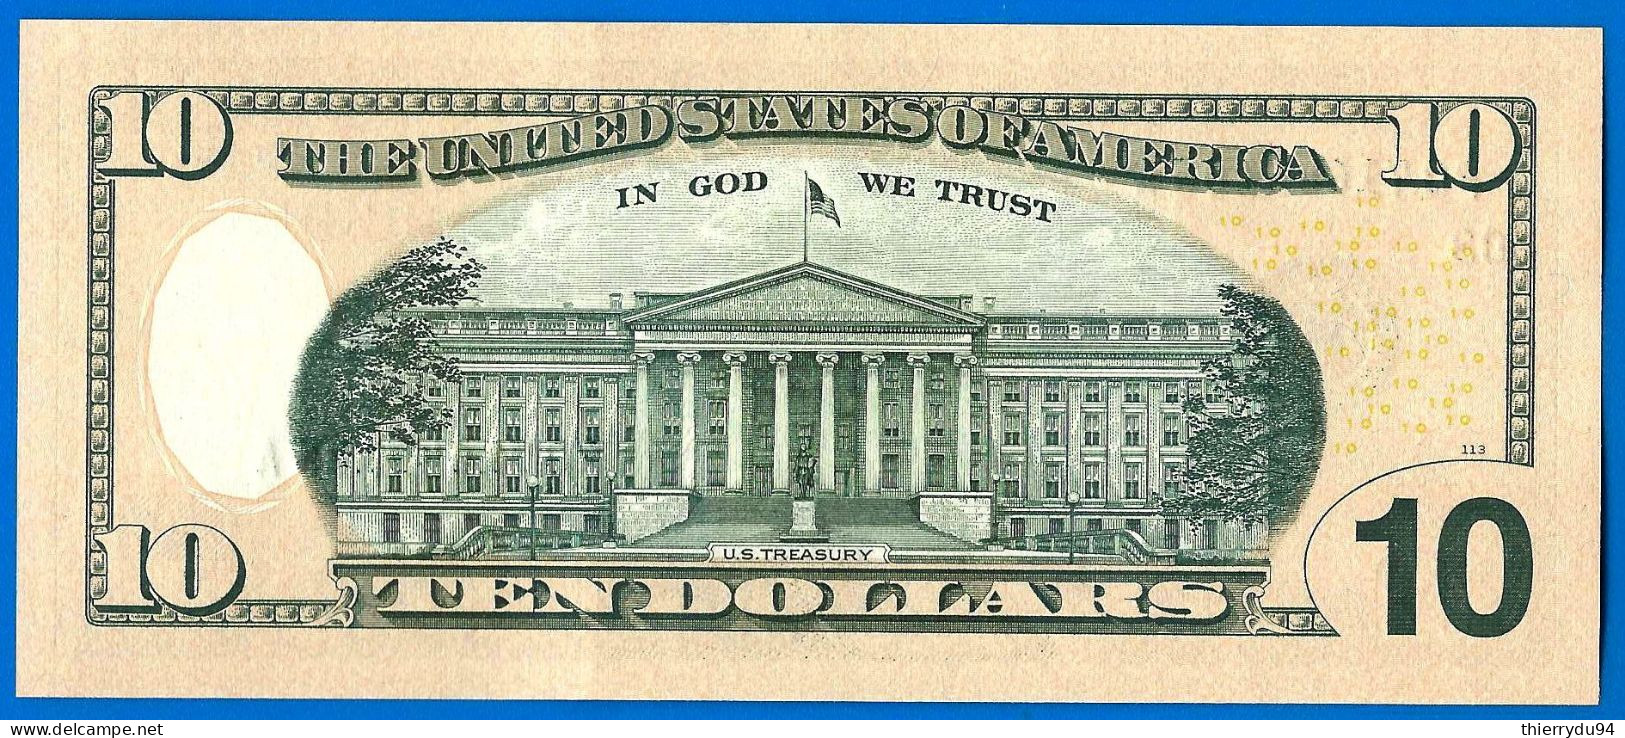 USA 10 Dollars 2017 A Neuf UNC Mint Philadelphia C3 Suffixe A Etats Unis United States Dollar Paypal Bitcoin - Biljetten Van De Verenigde Staten (1862-1923)